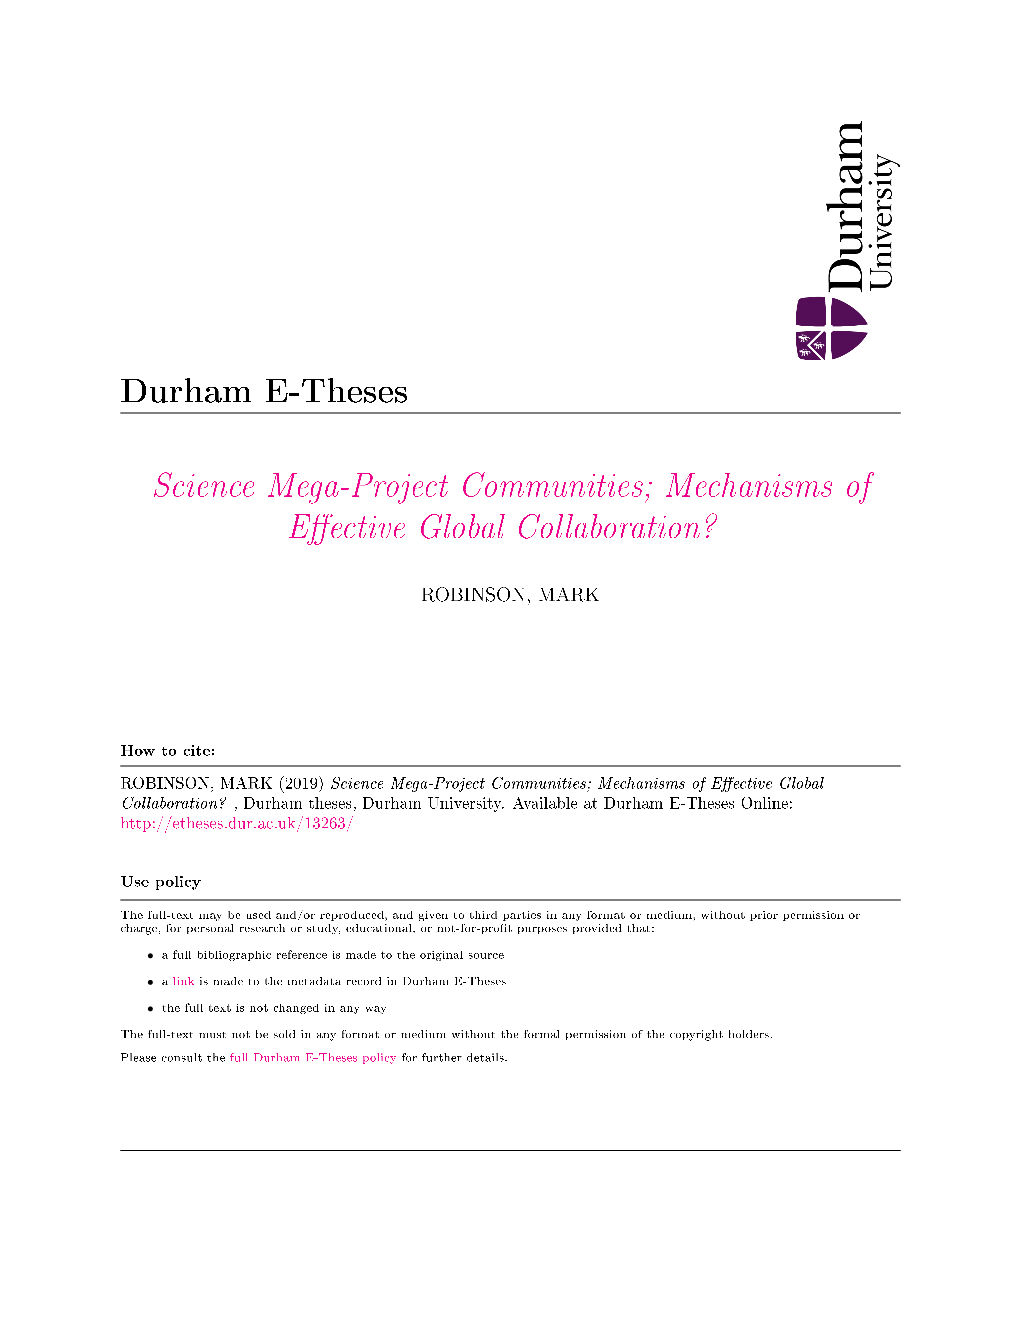 SMP Communities Mechanisms of Effective Global